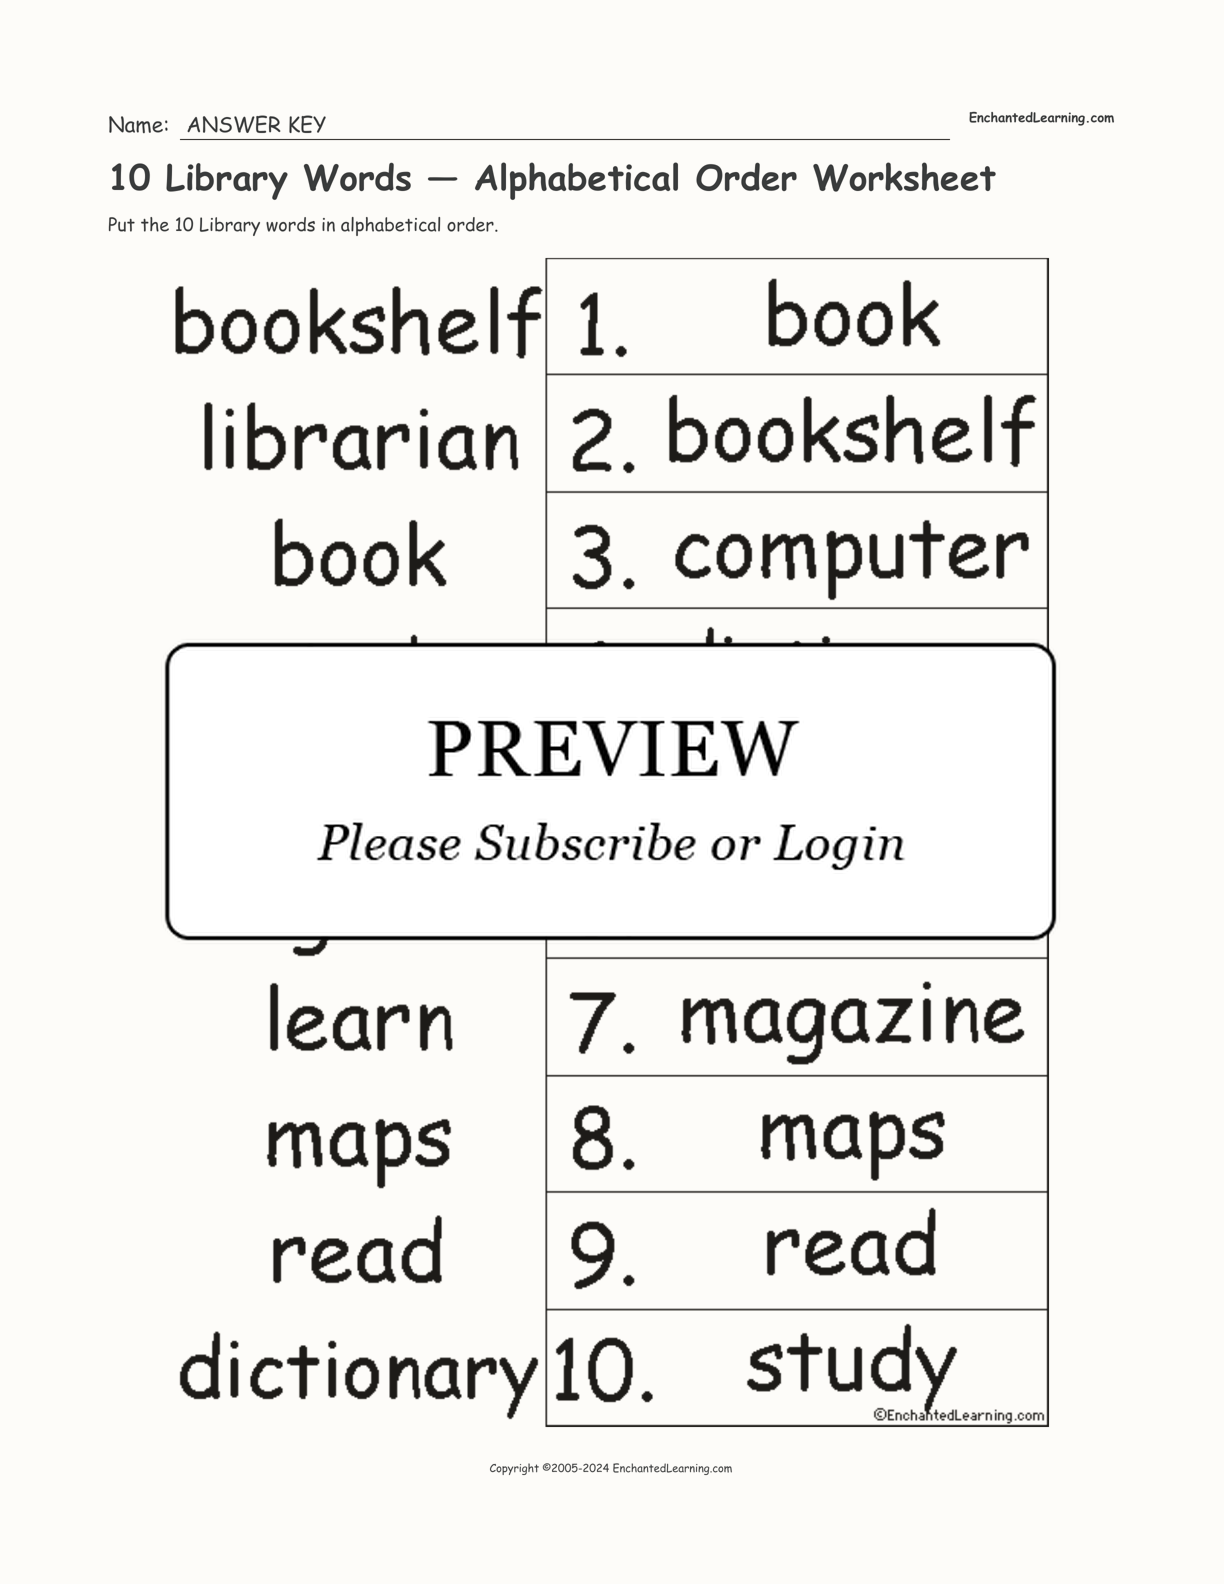 10 Library Words — Alphabetical Order Worksheet interactive worksheet page 2